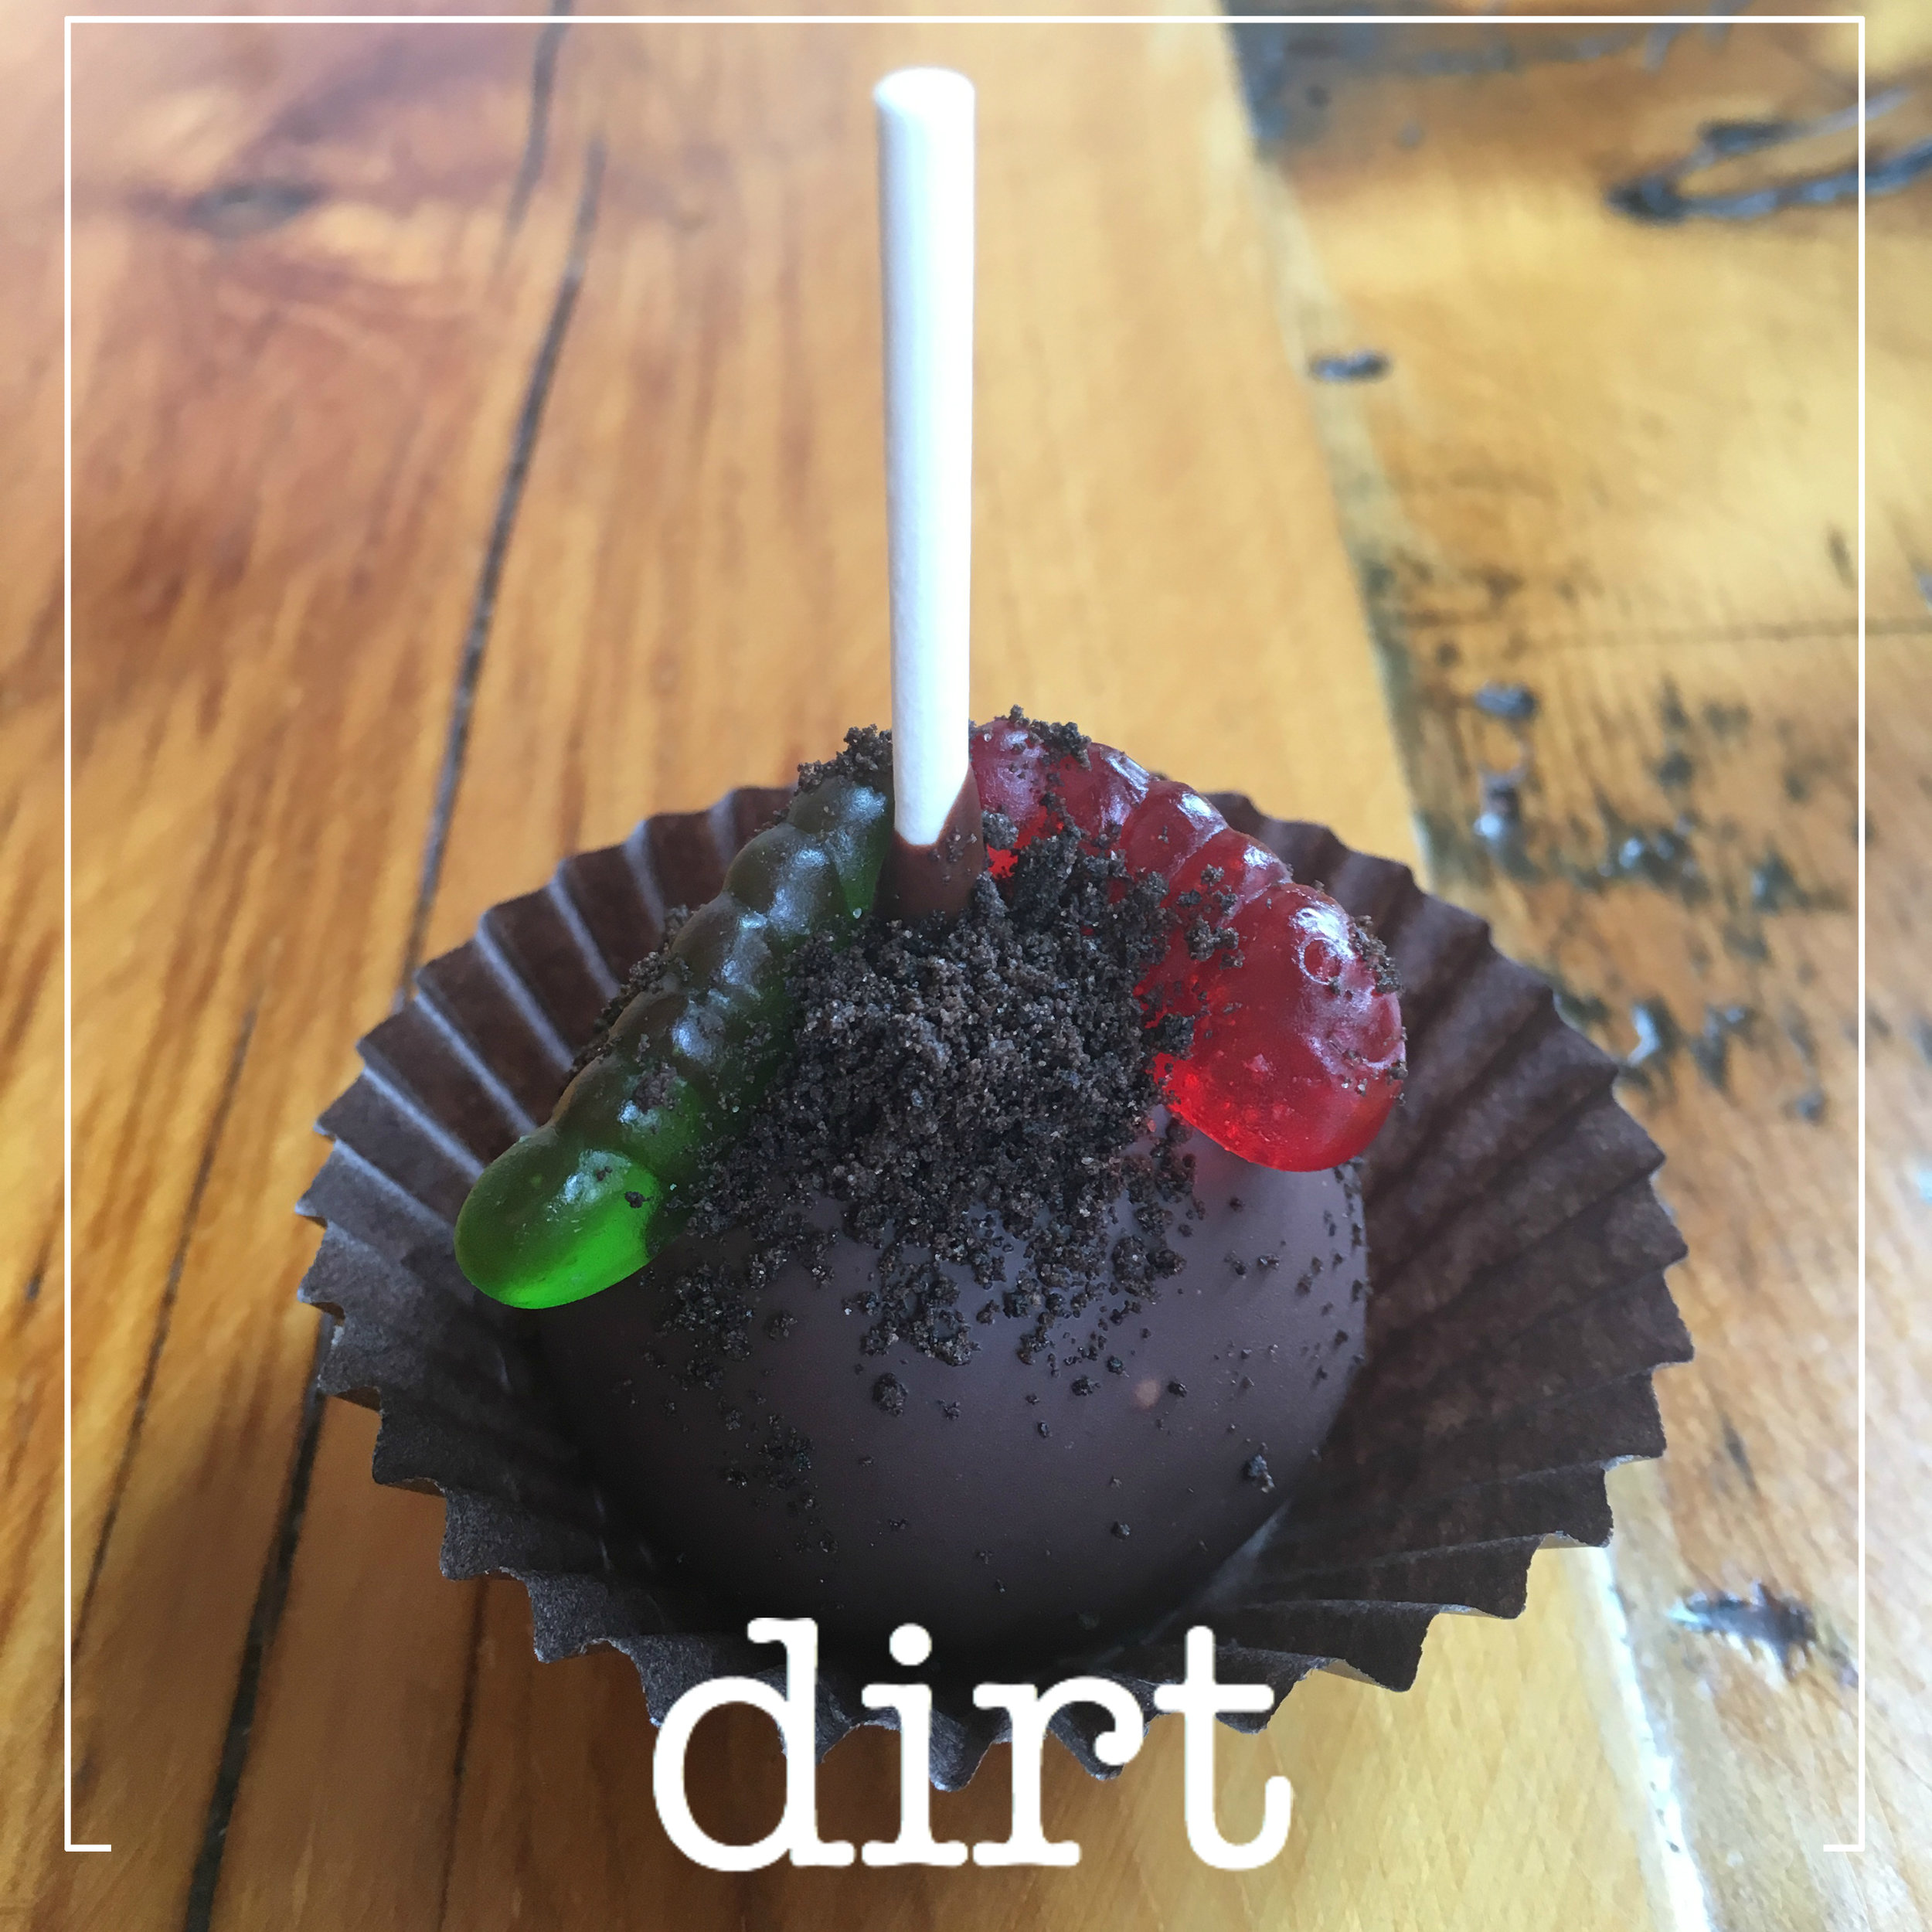 Dirt pop.jpg